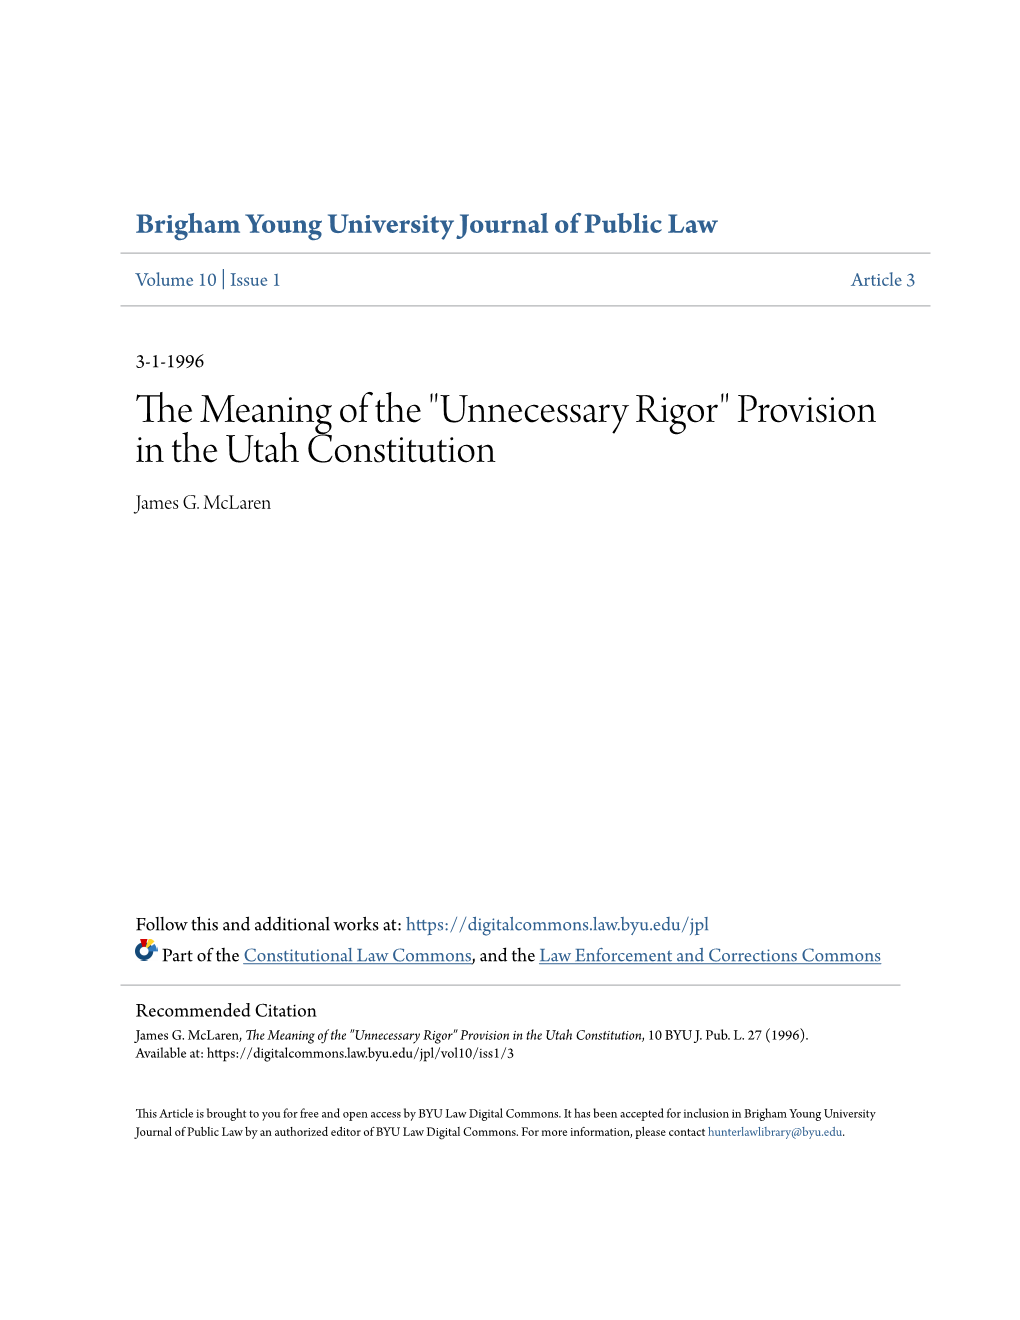 Unnecessary Rigor" Provision in the Utah Constitution James G